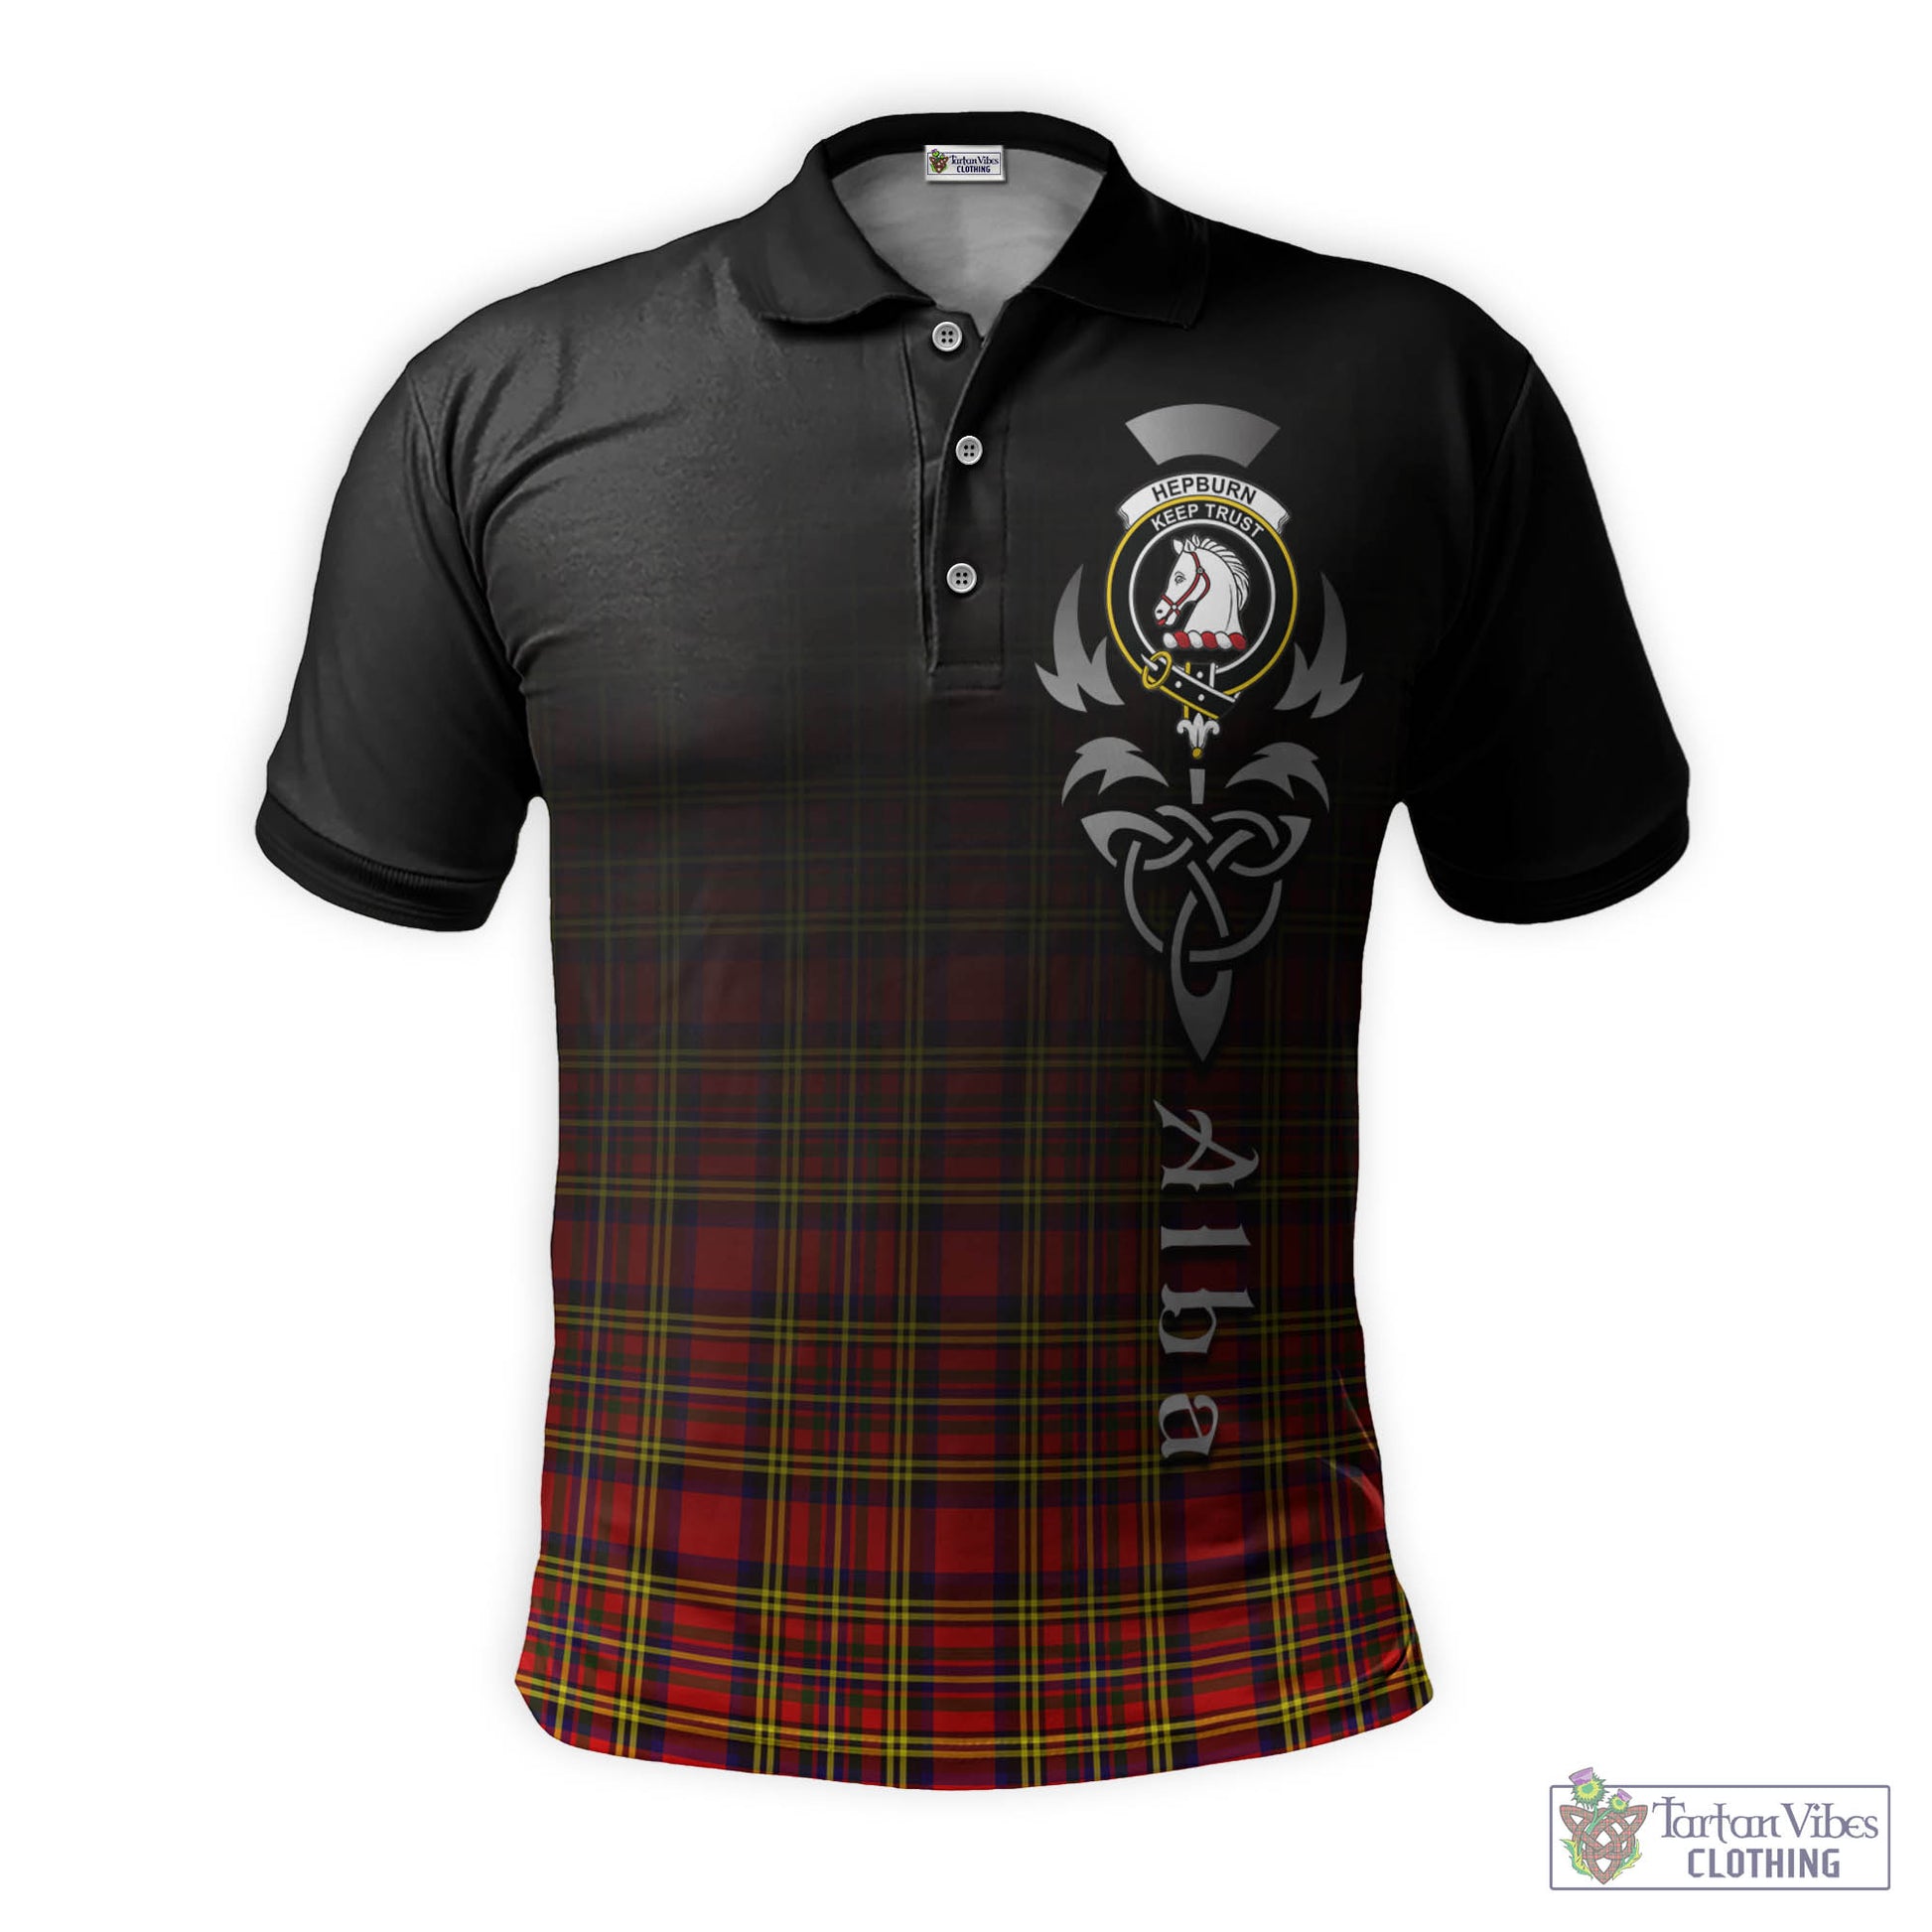 Tartan Vibes Clothing Hepburn Modern Tartan Polo Shirt Featuring Alba Gu Brath Family Crest Celtic Inspired